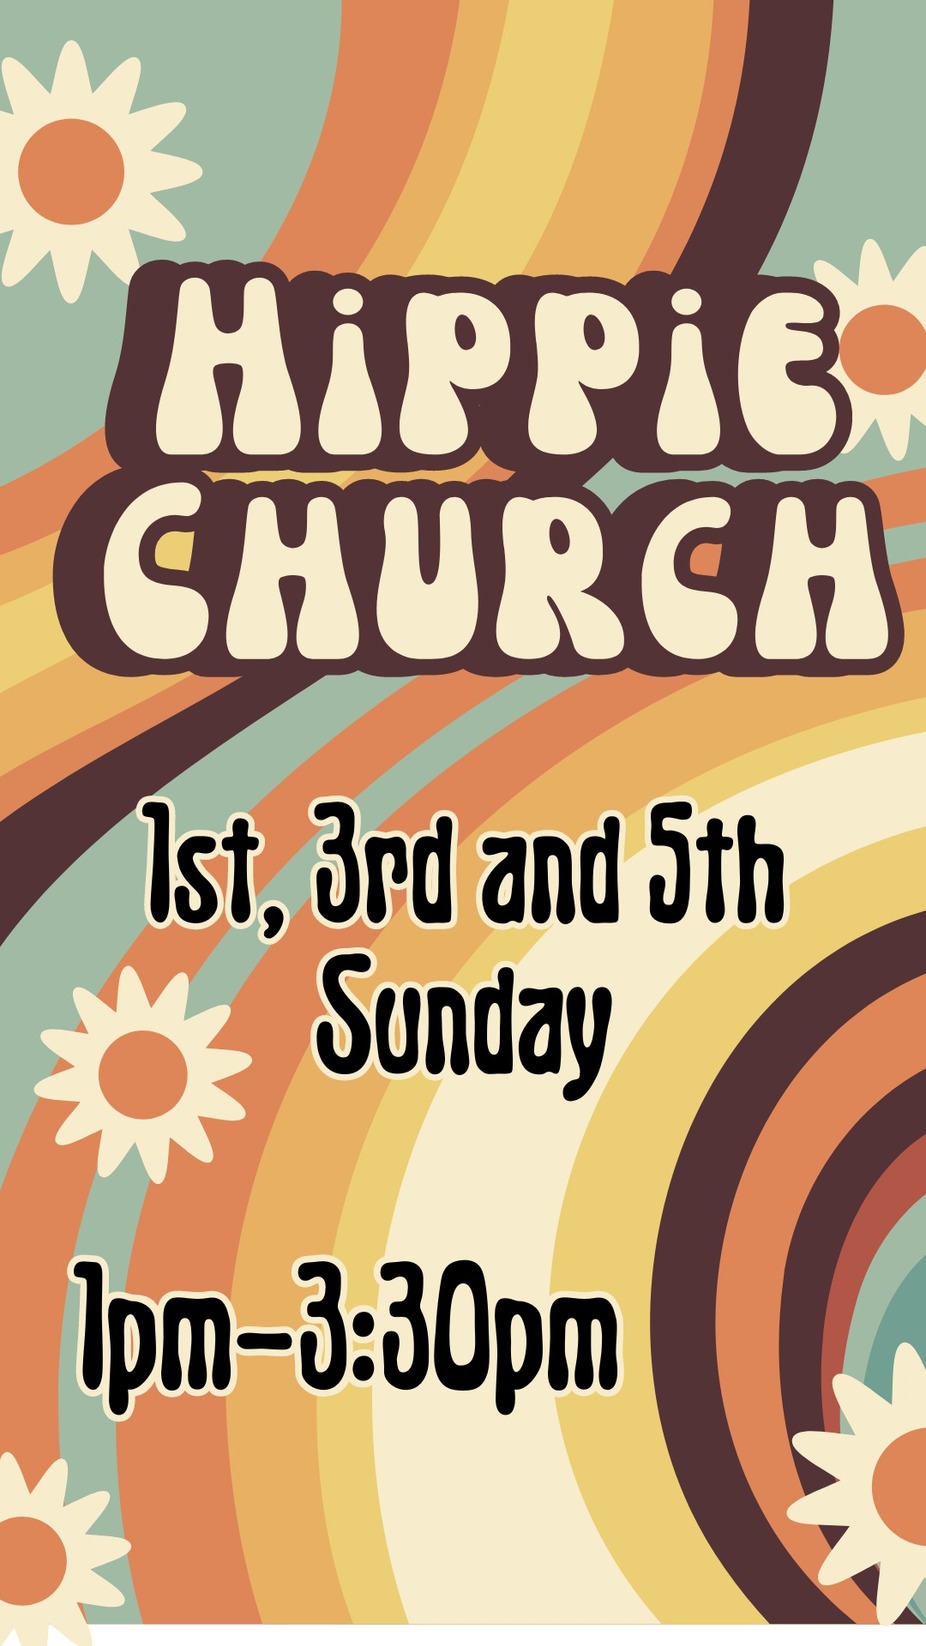 Hippie Sundays event photo